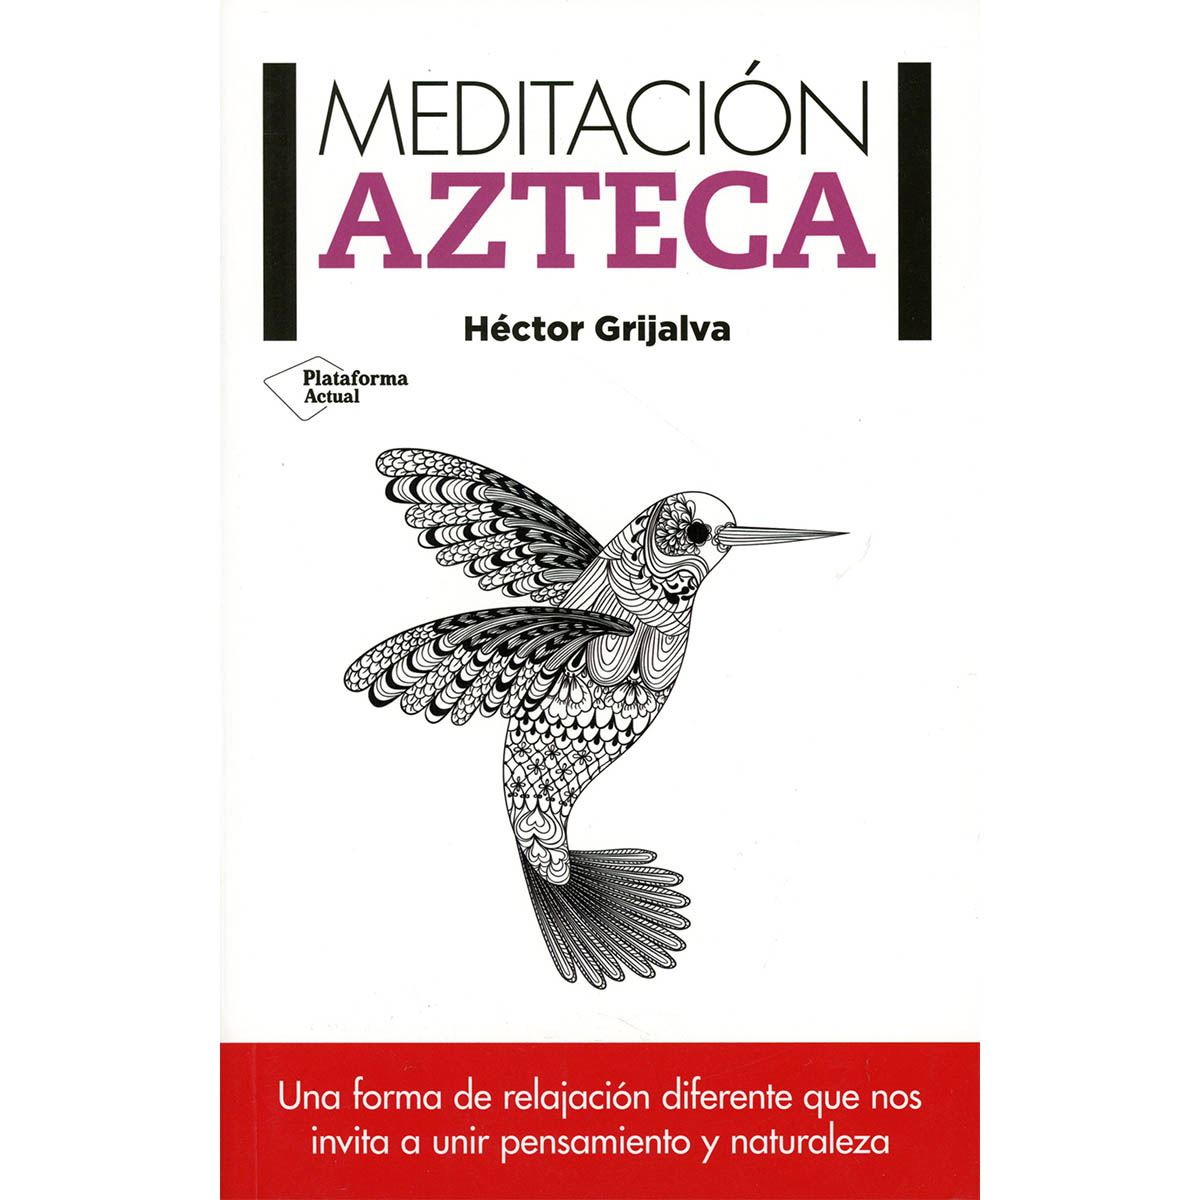 Meditacion azteca